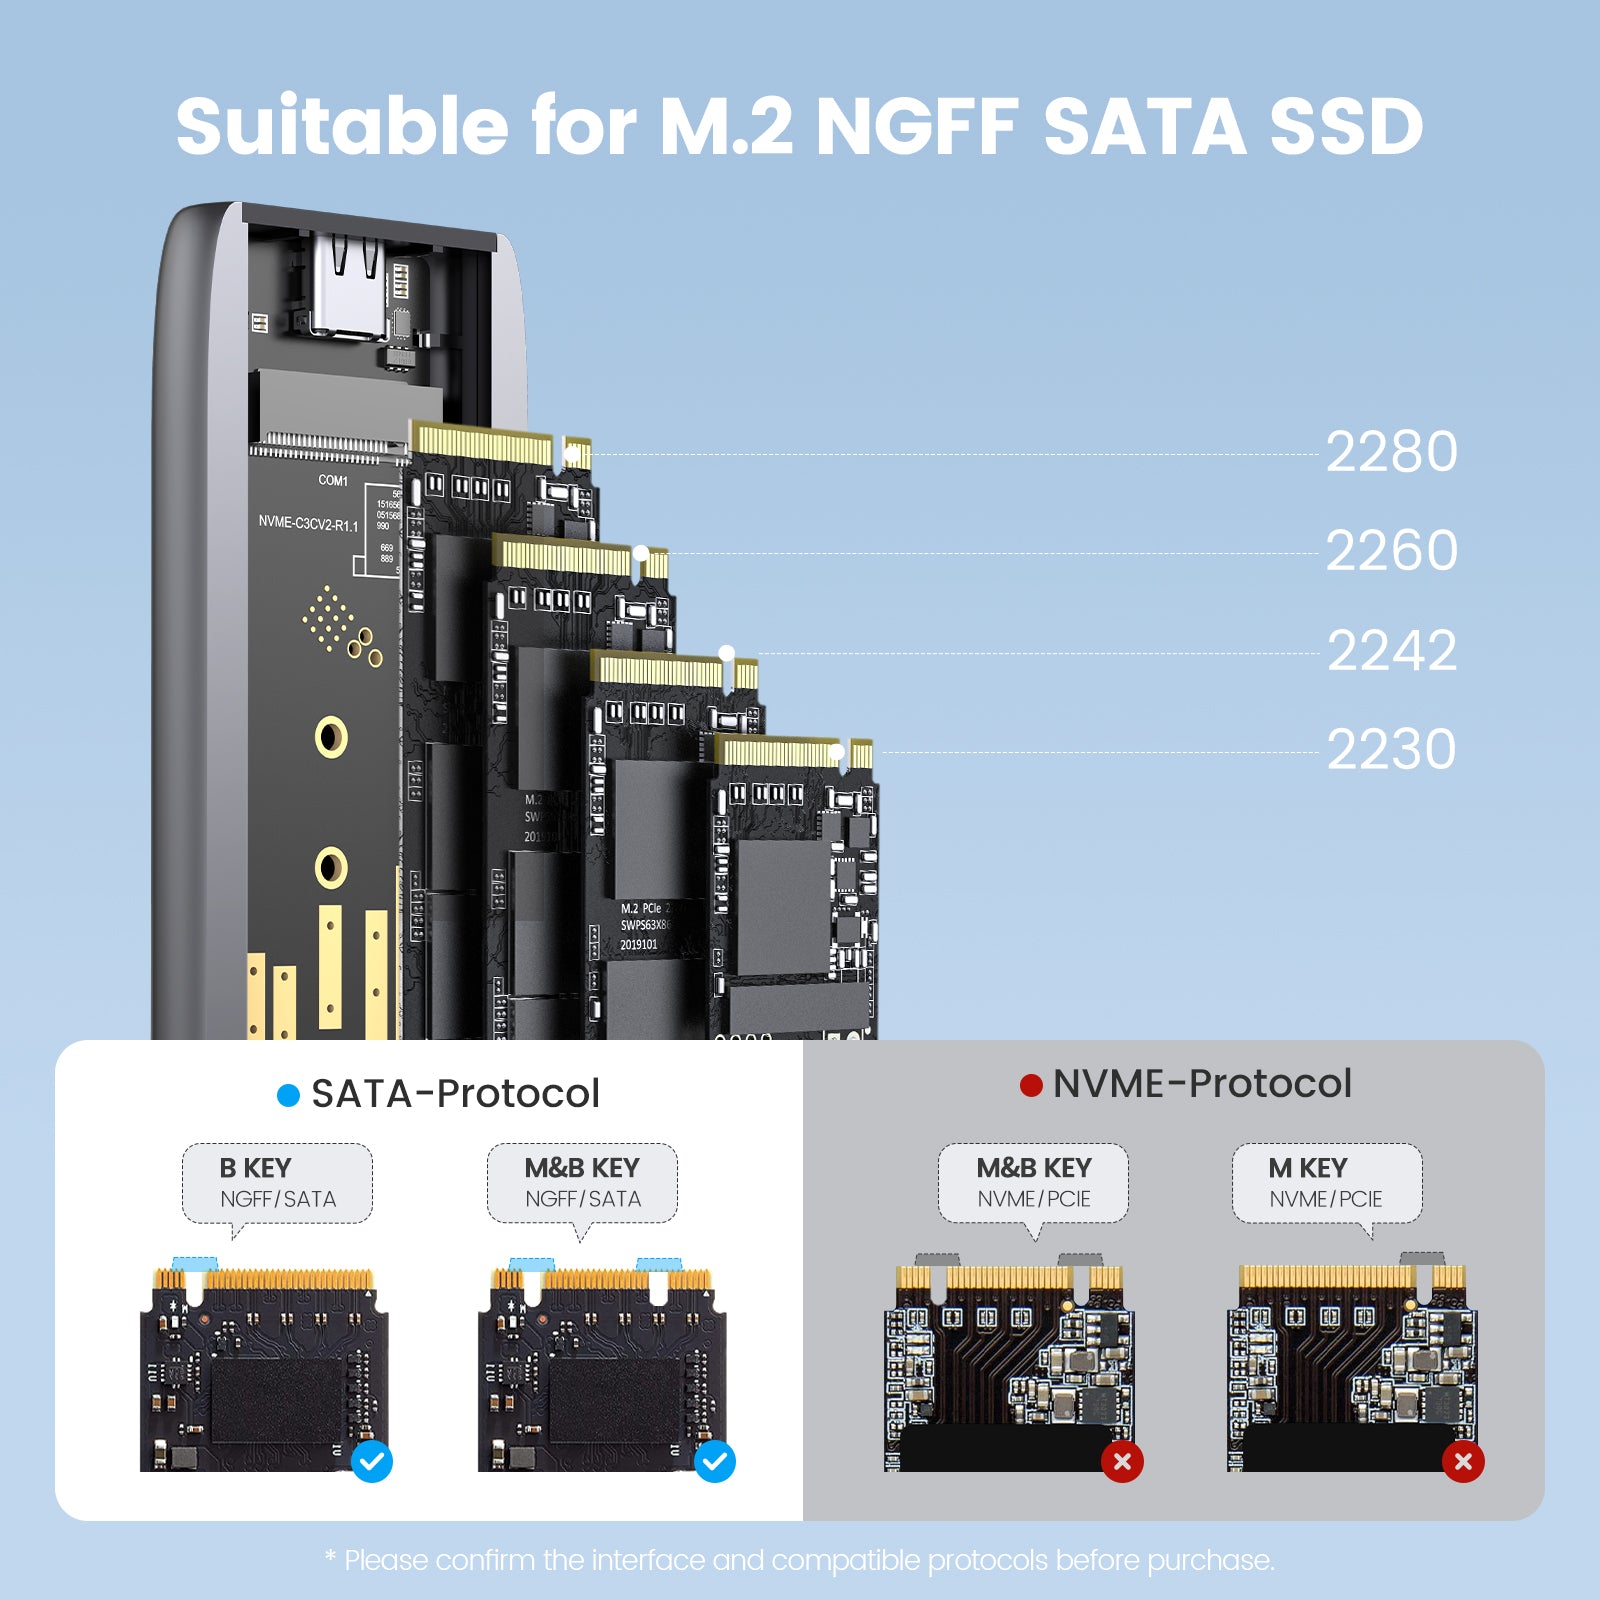 GiGimundo M.2 SSD Enclosure Tool-Free Aluminum Heat Dissipation for 2230/2242/2260/2280 M.2 NGFF SSDs